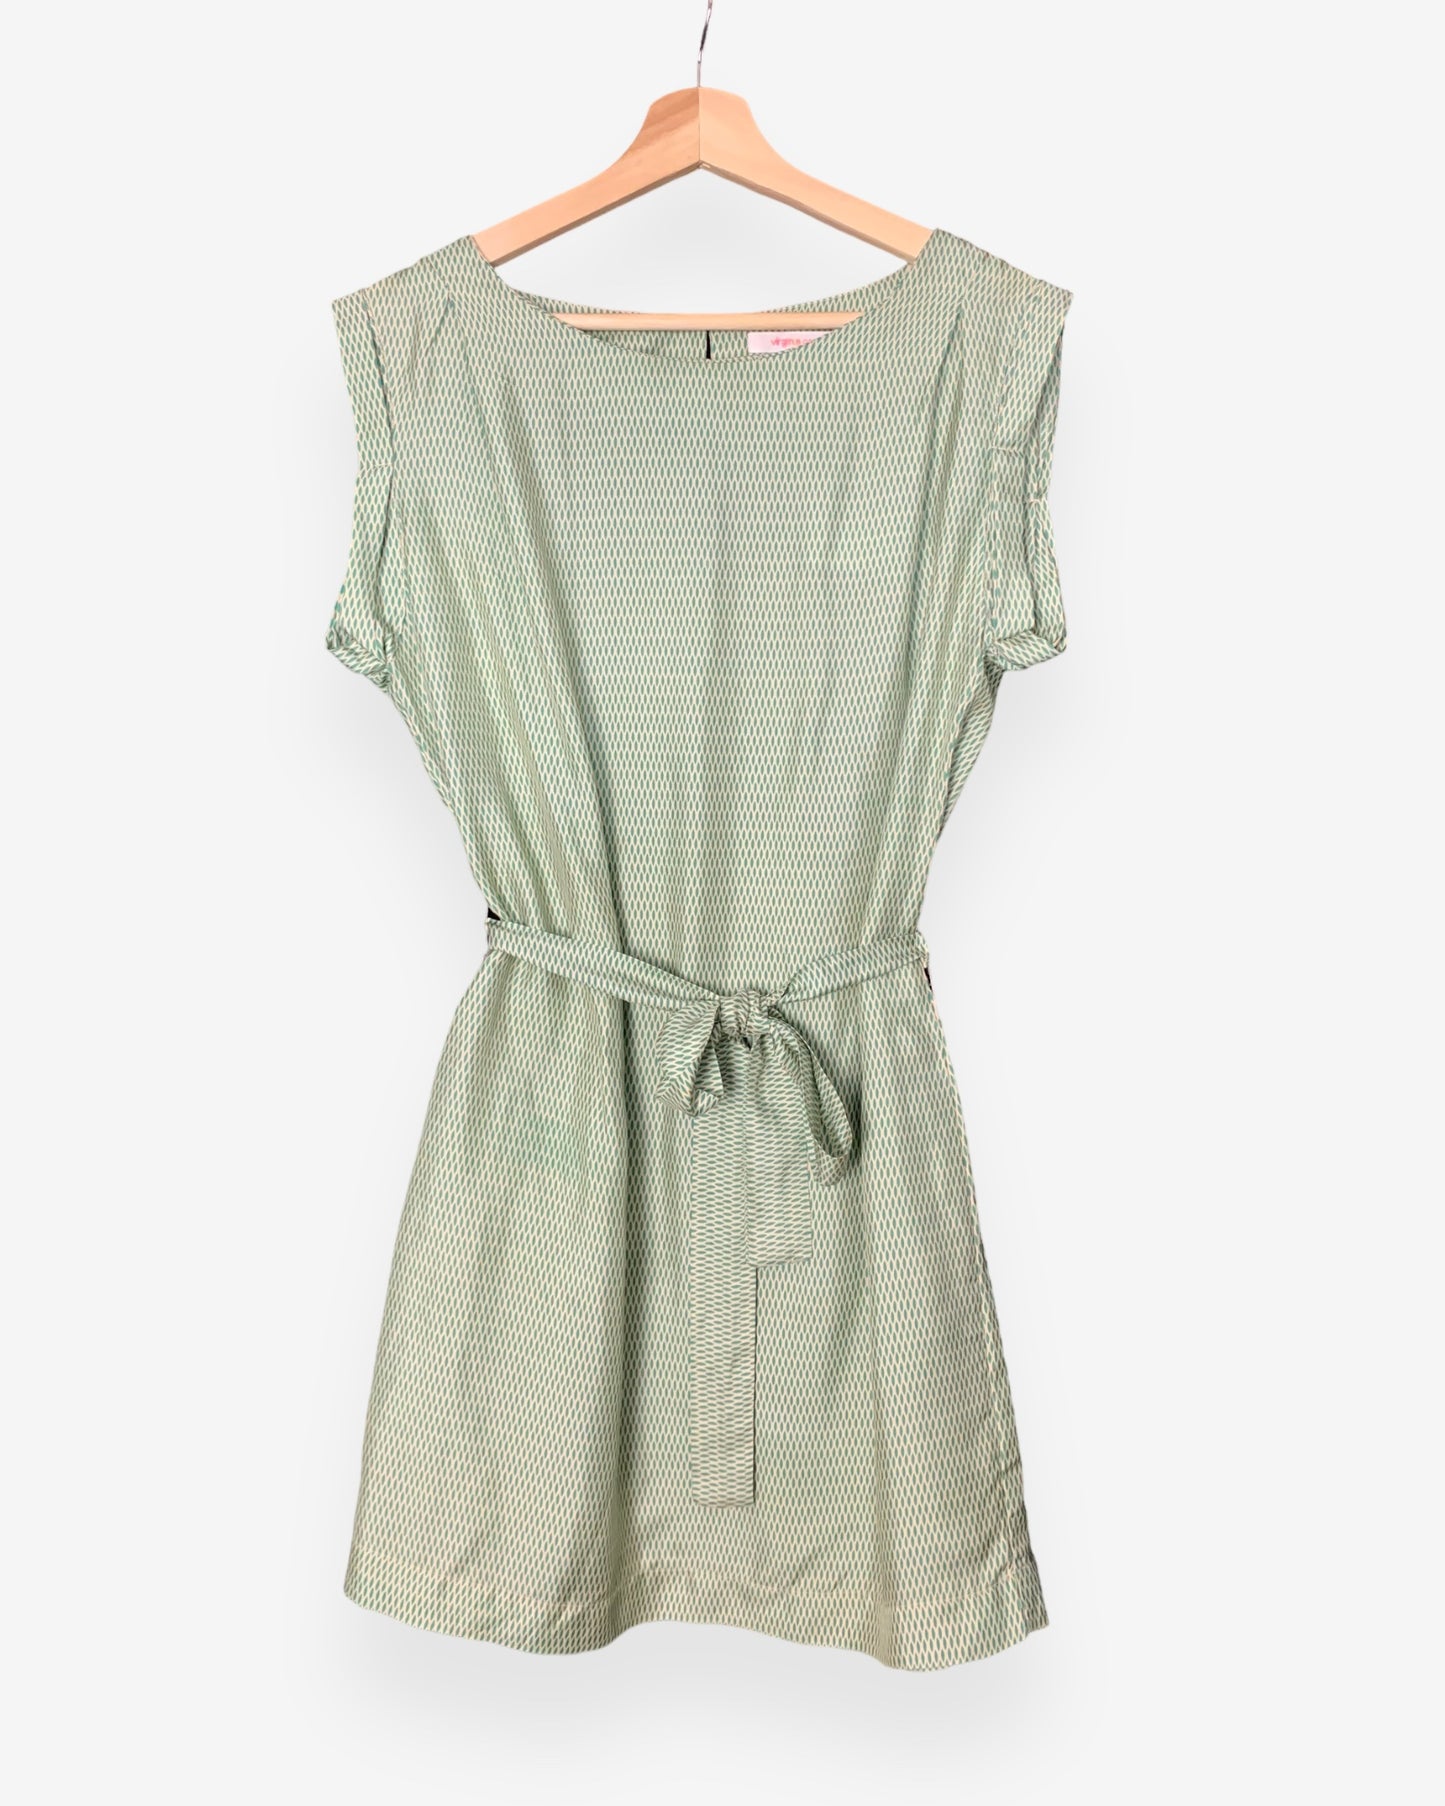 Virginie Castaway green patterned silk dress